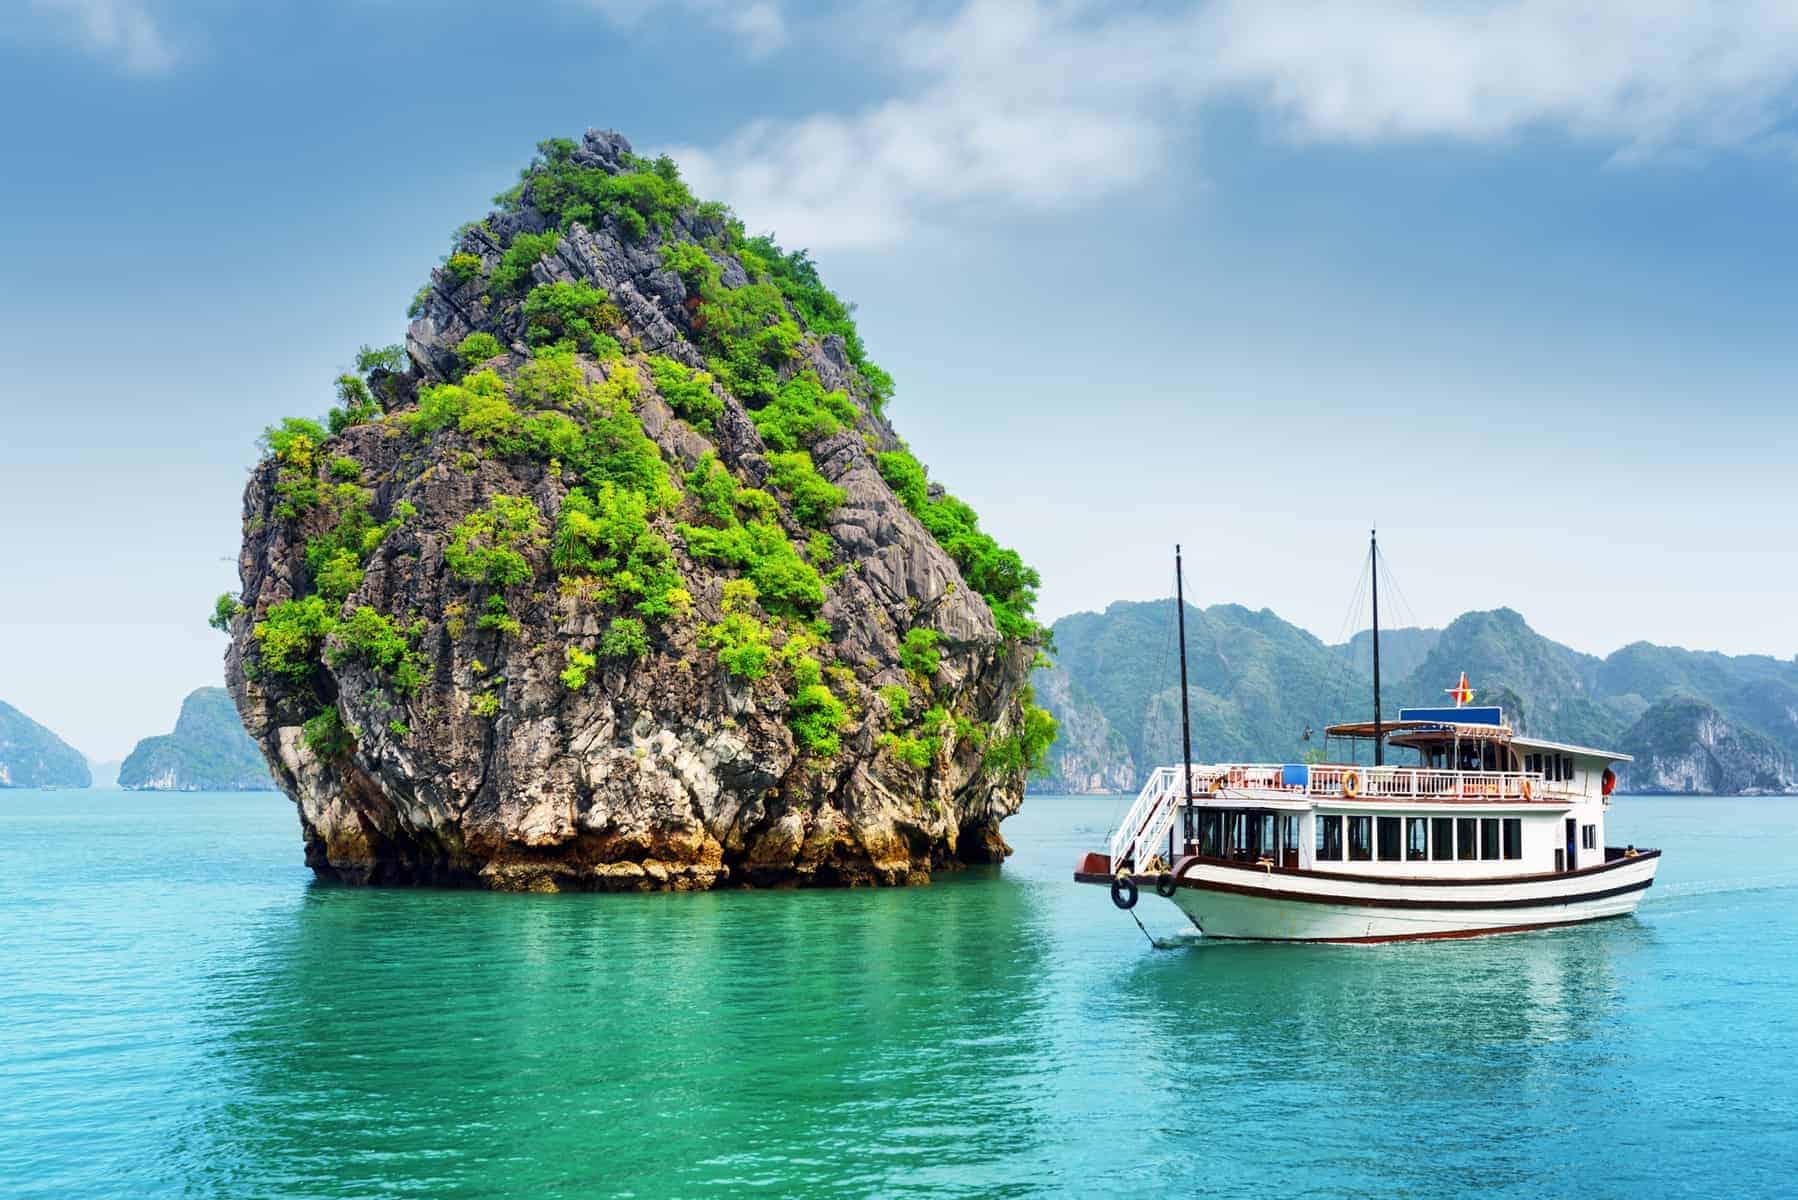 Ha Long Bay i Tonkin, the South China Sea, Vietnam. The Halong Bay is a popular tourist destination of Asia